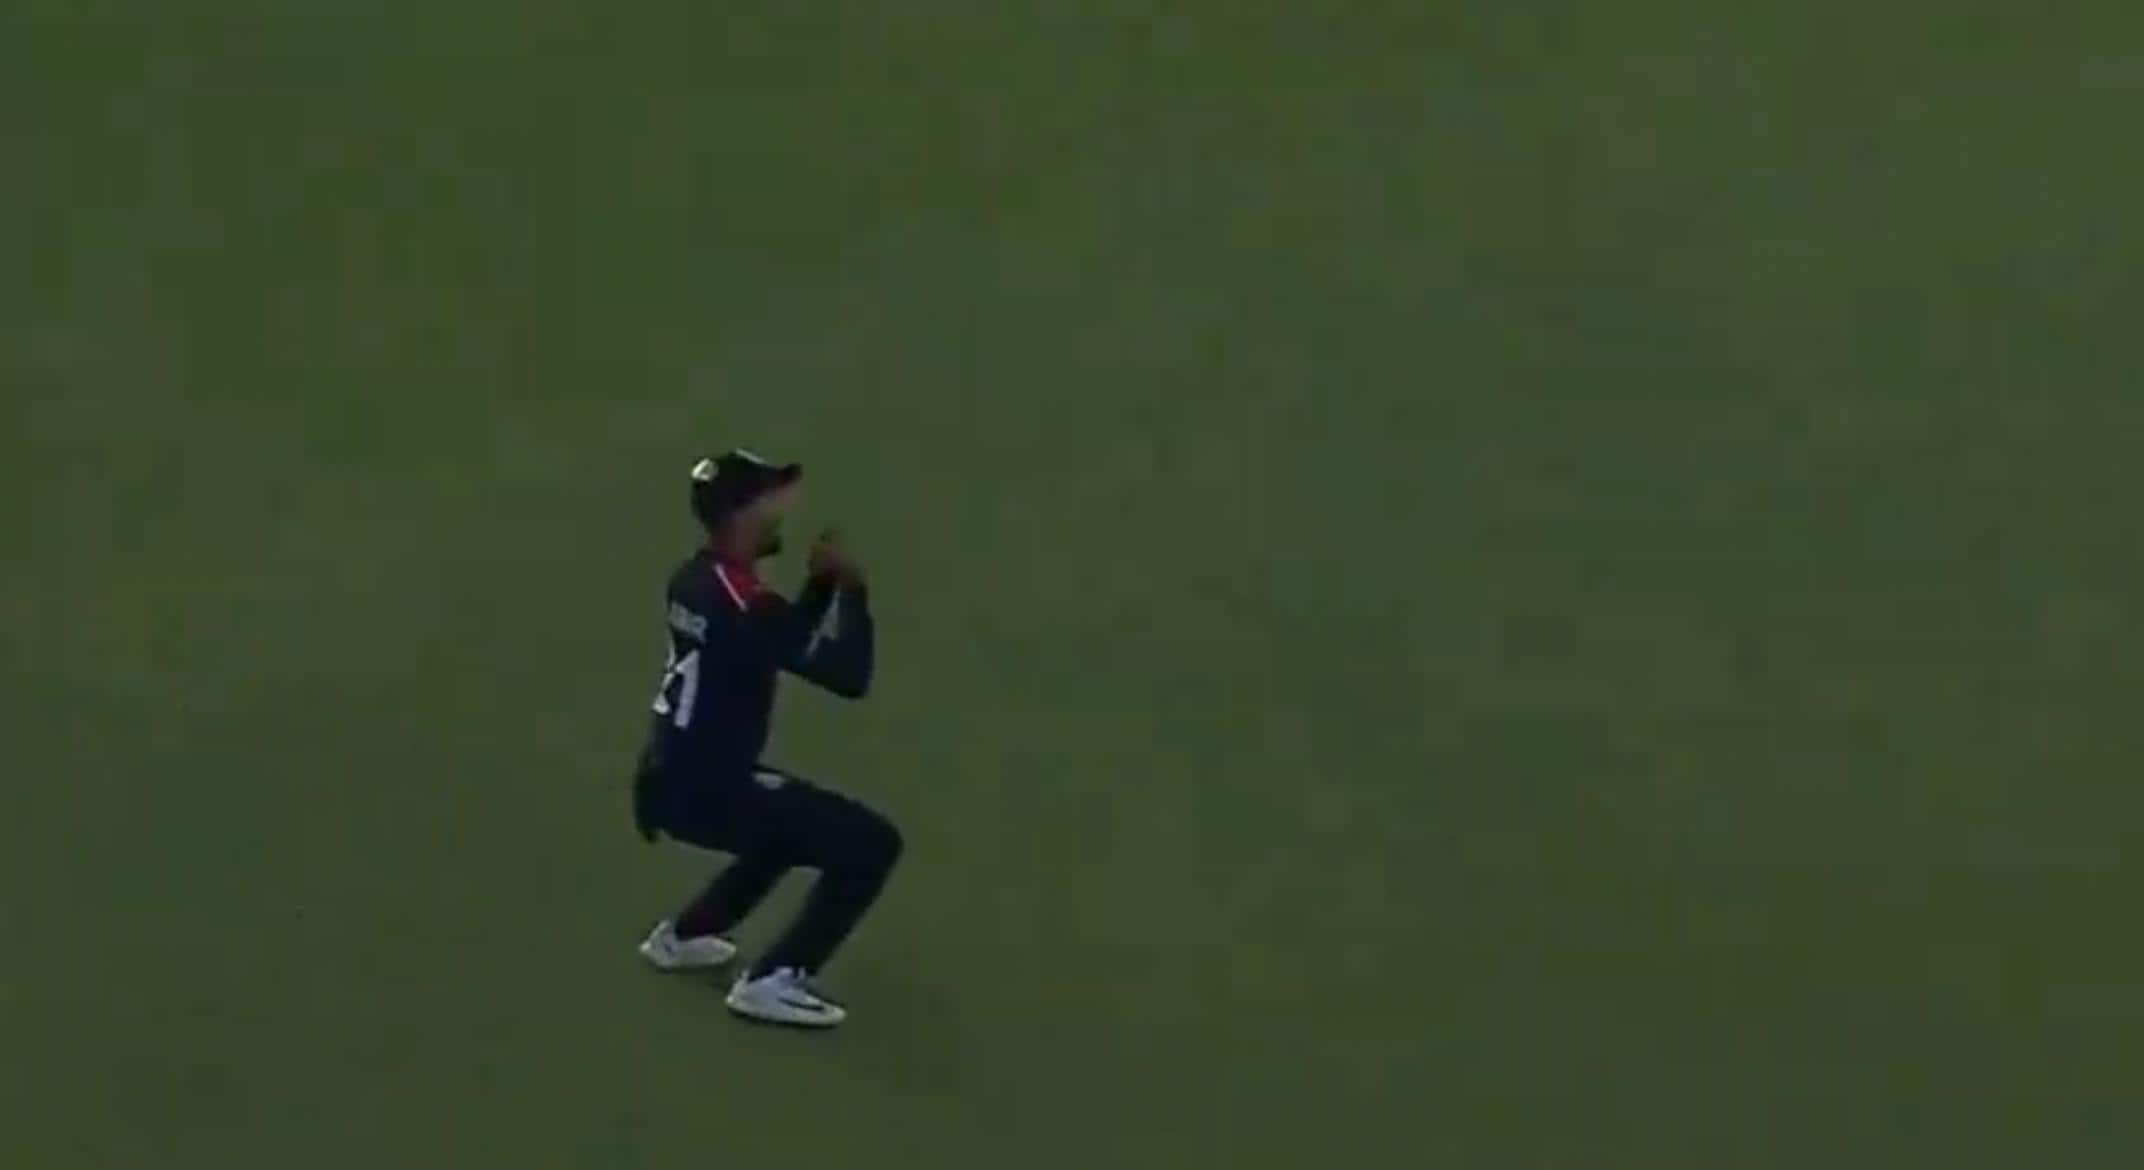 Nitish Kumar takes the catch [X]